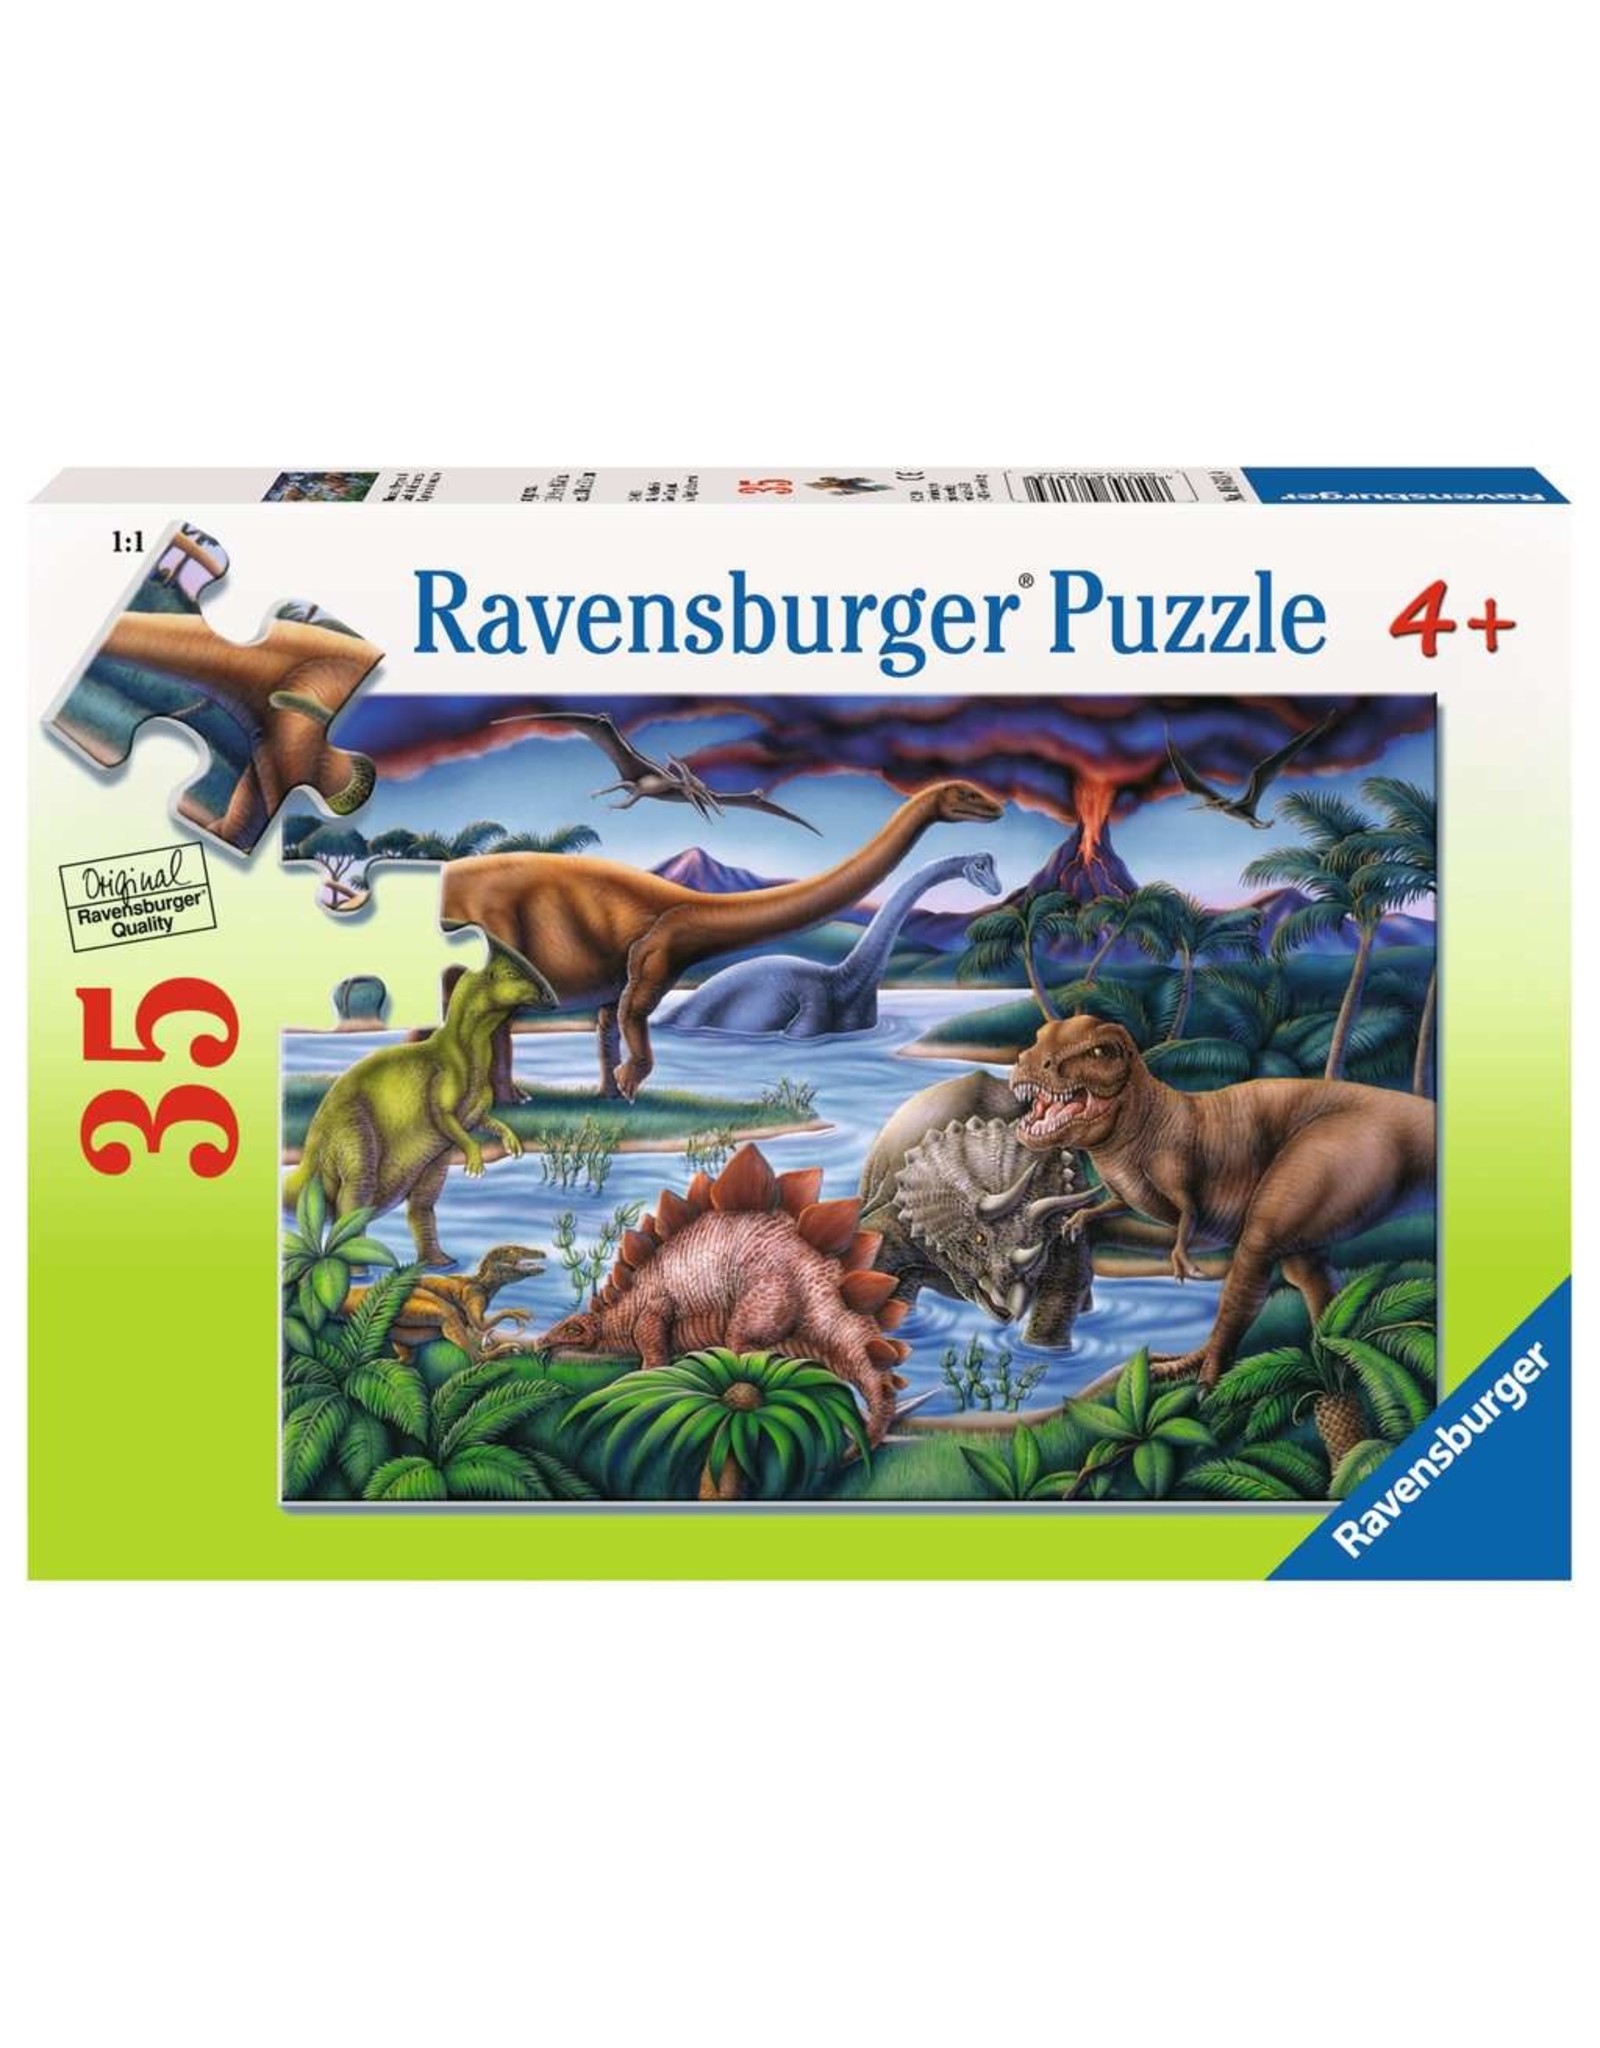 Ravensburger Dinosaur Playground